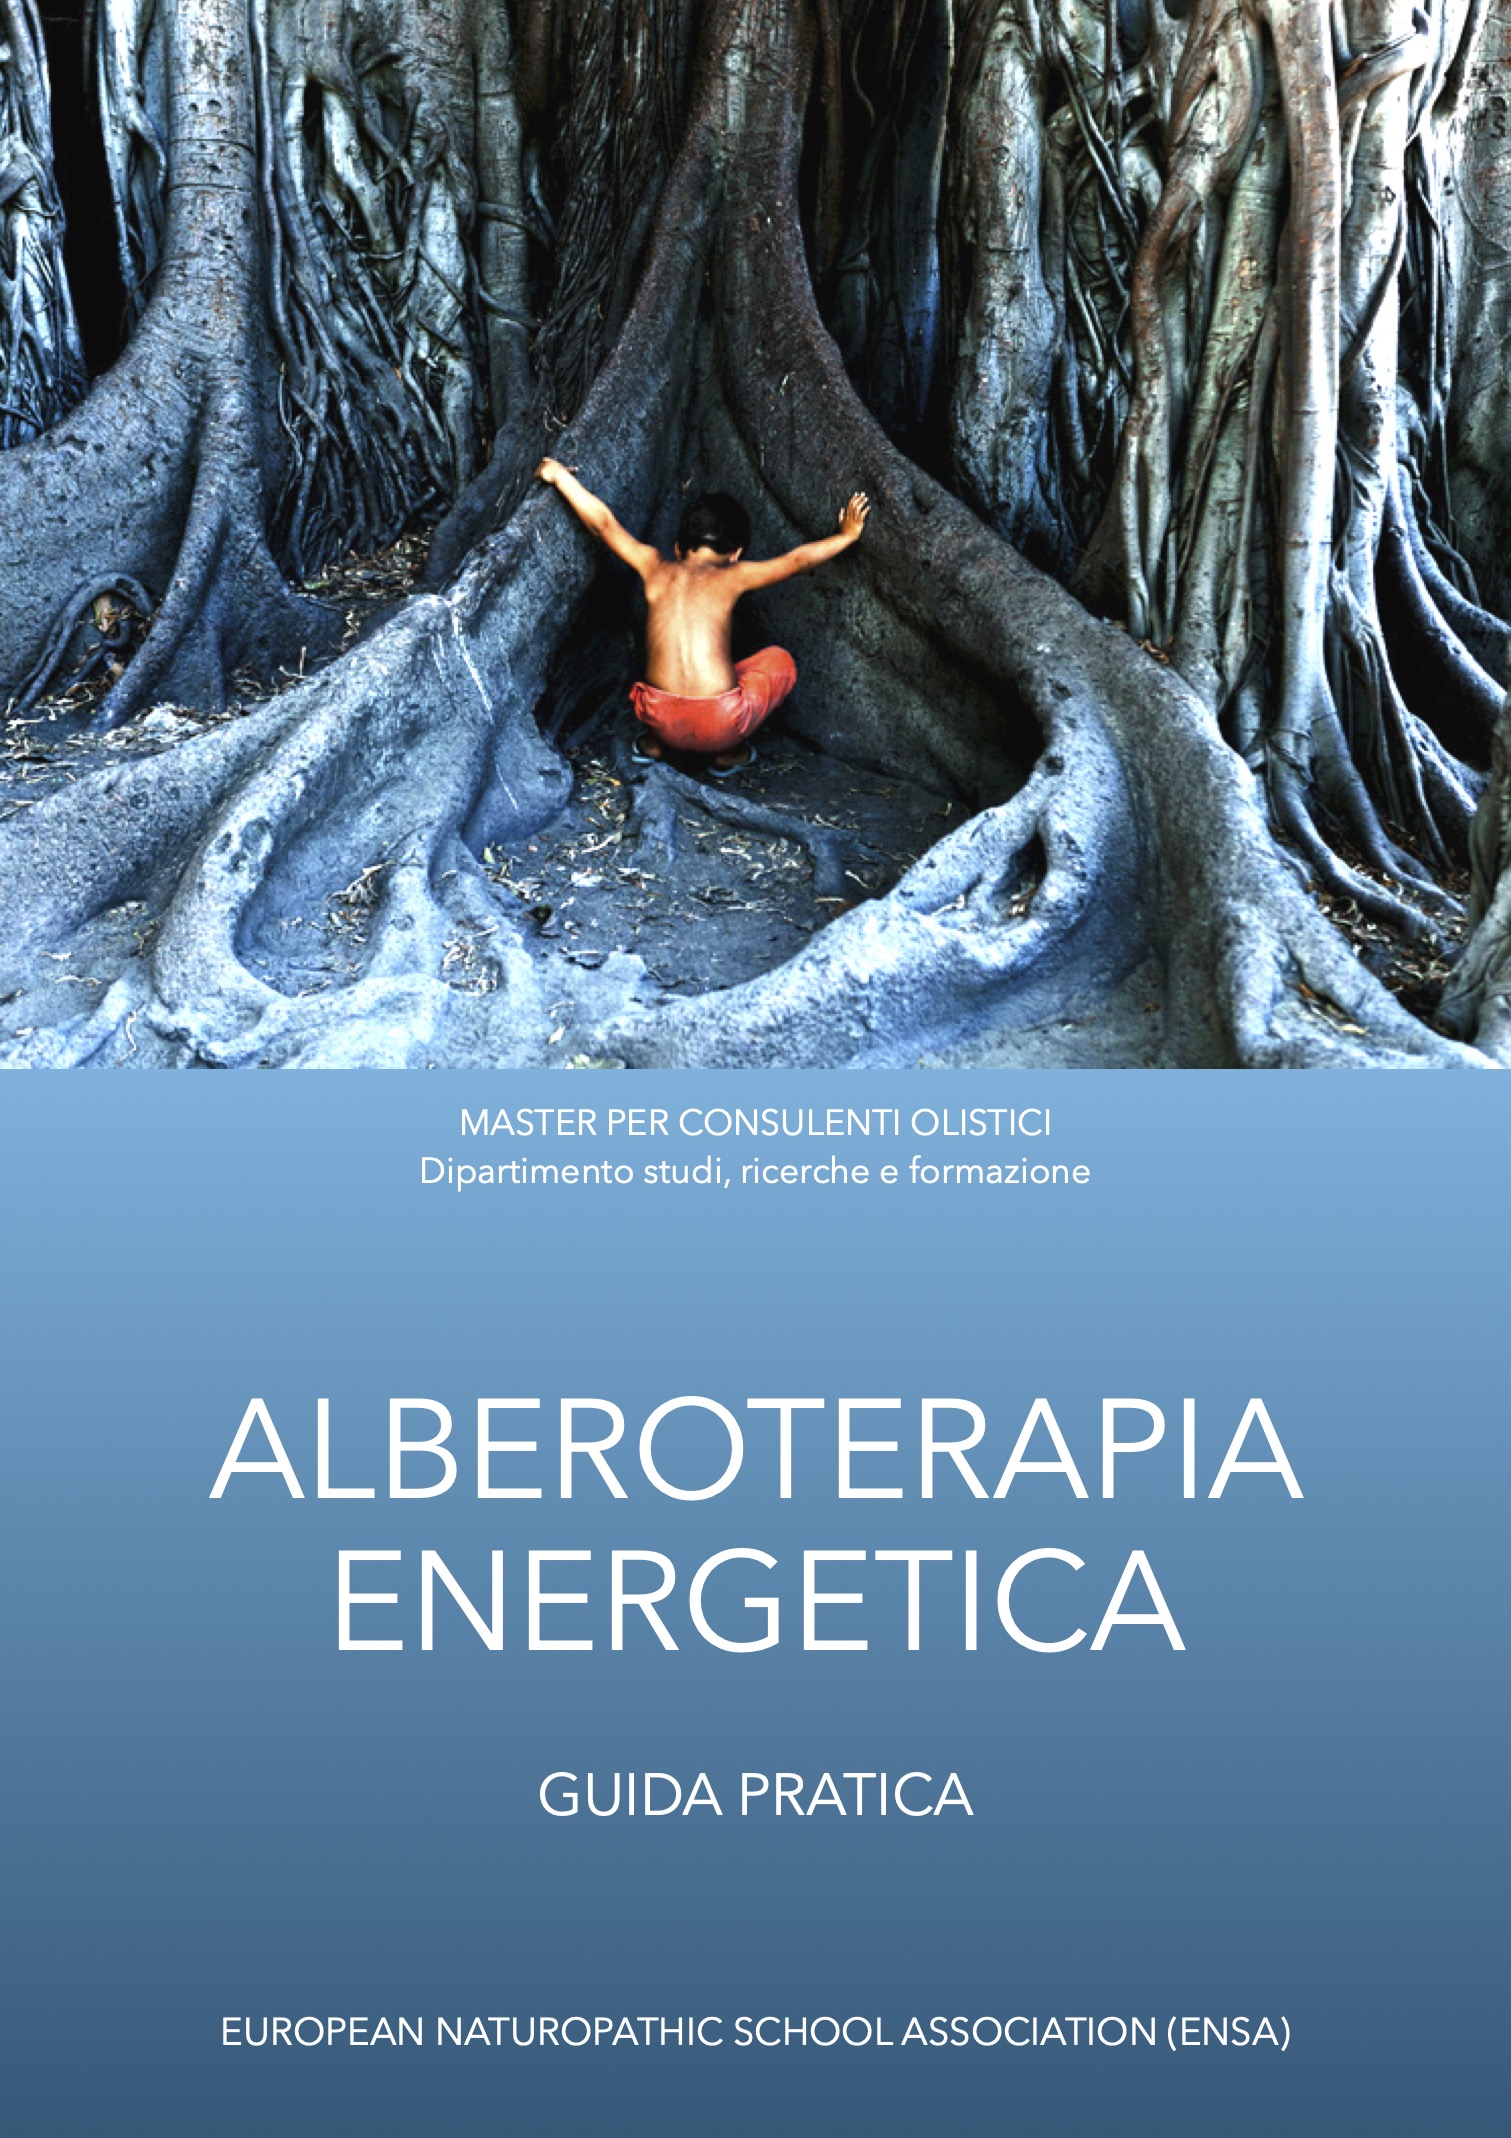 Alberoterapia energetica - Guida pratica